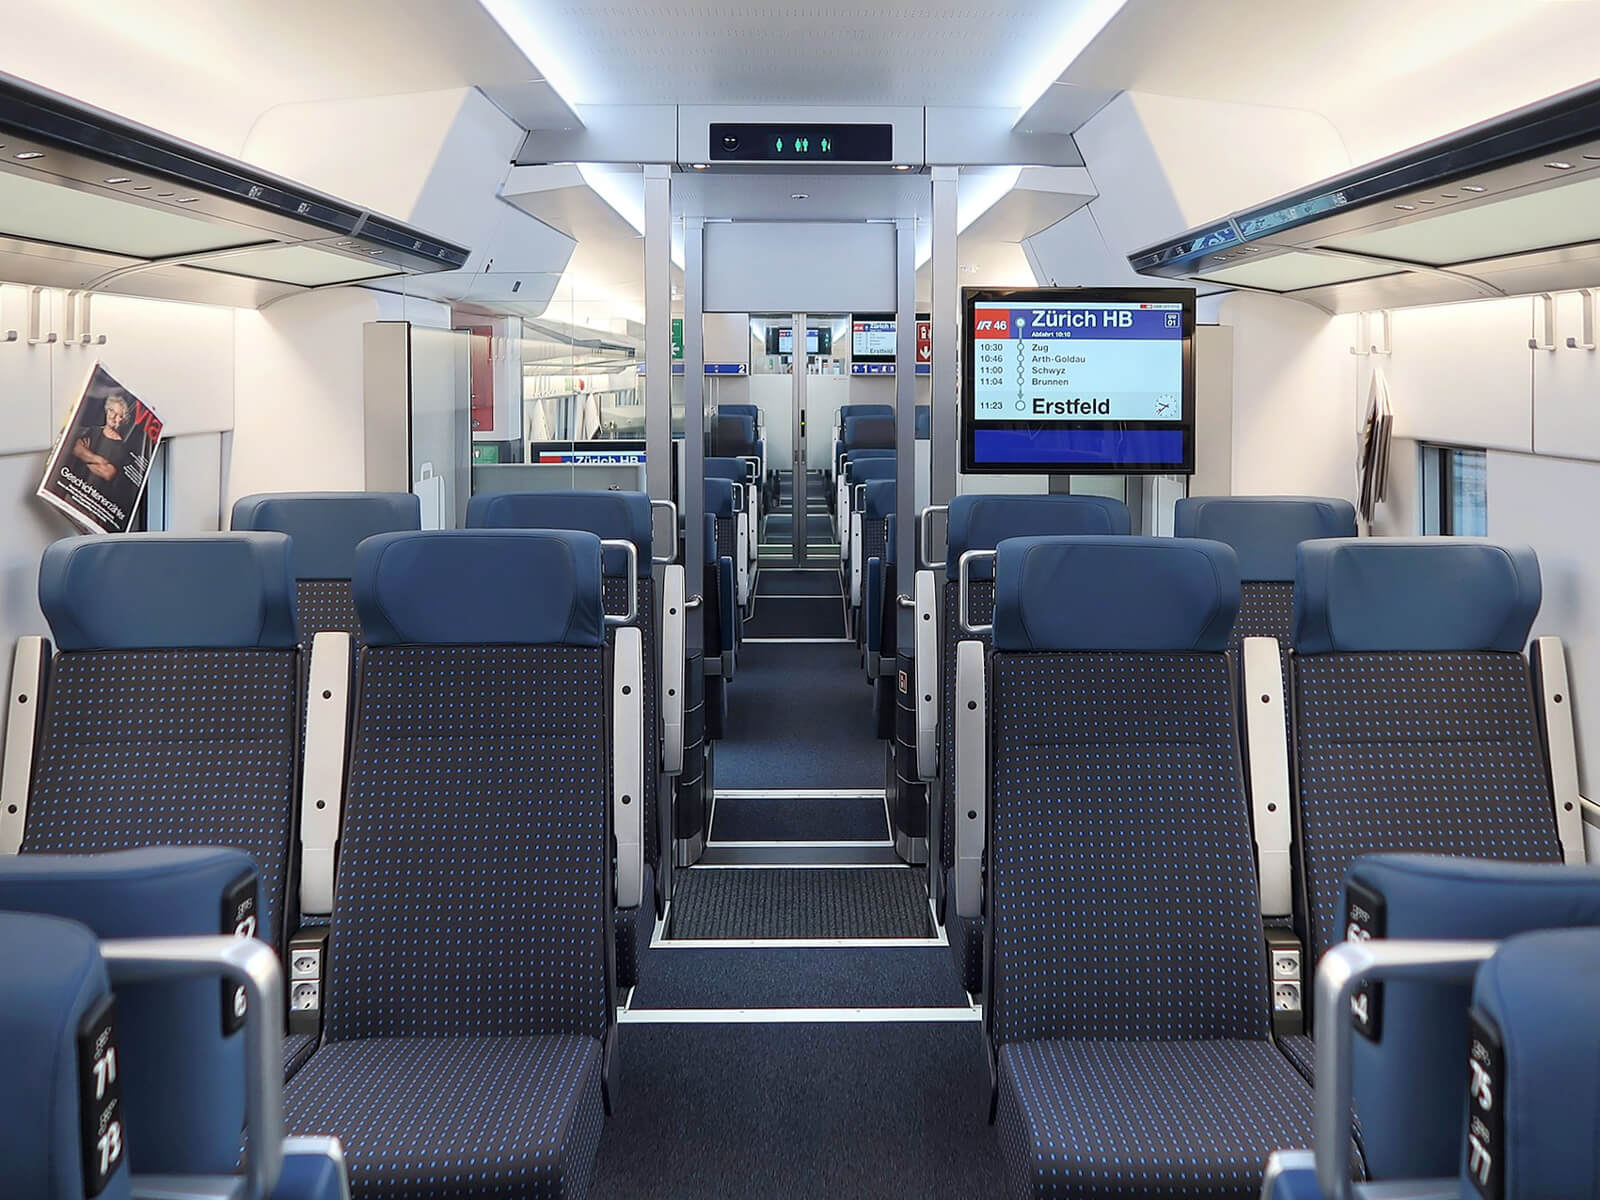 SBB Second Class Seating - Giruno - Copyright Kecko/Flickr